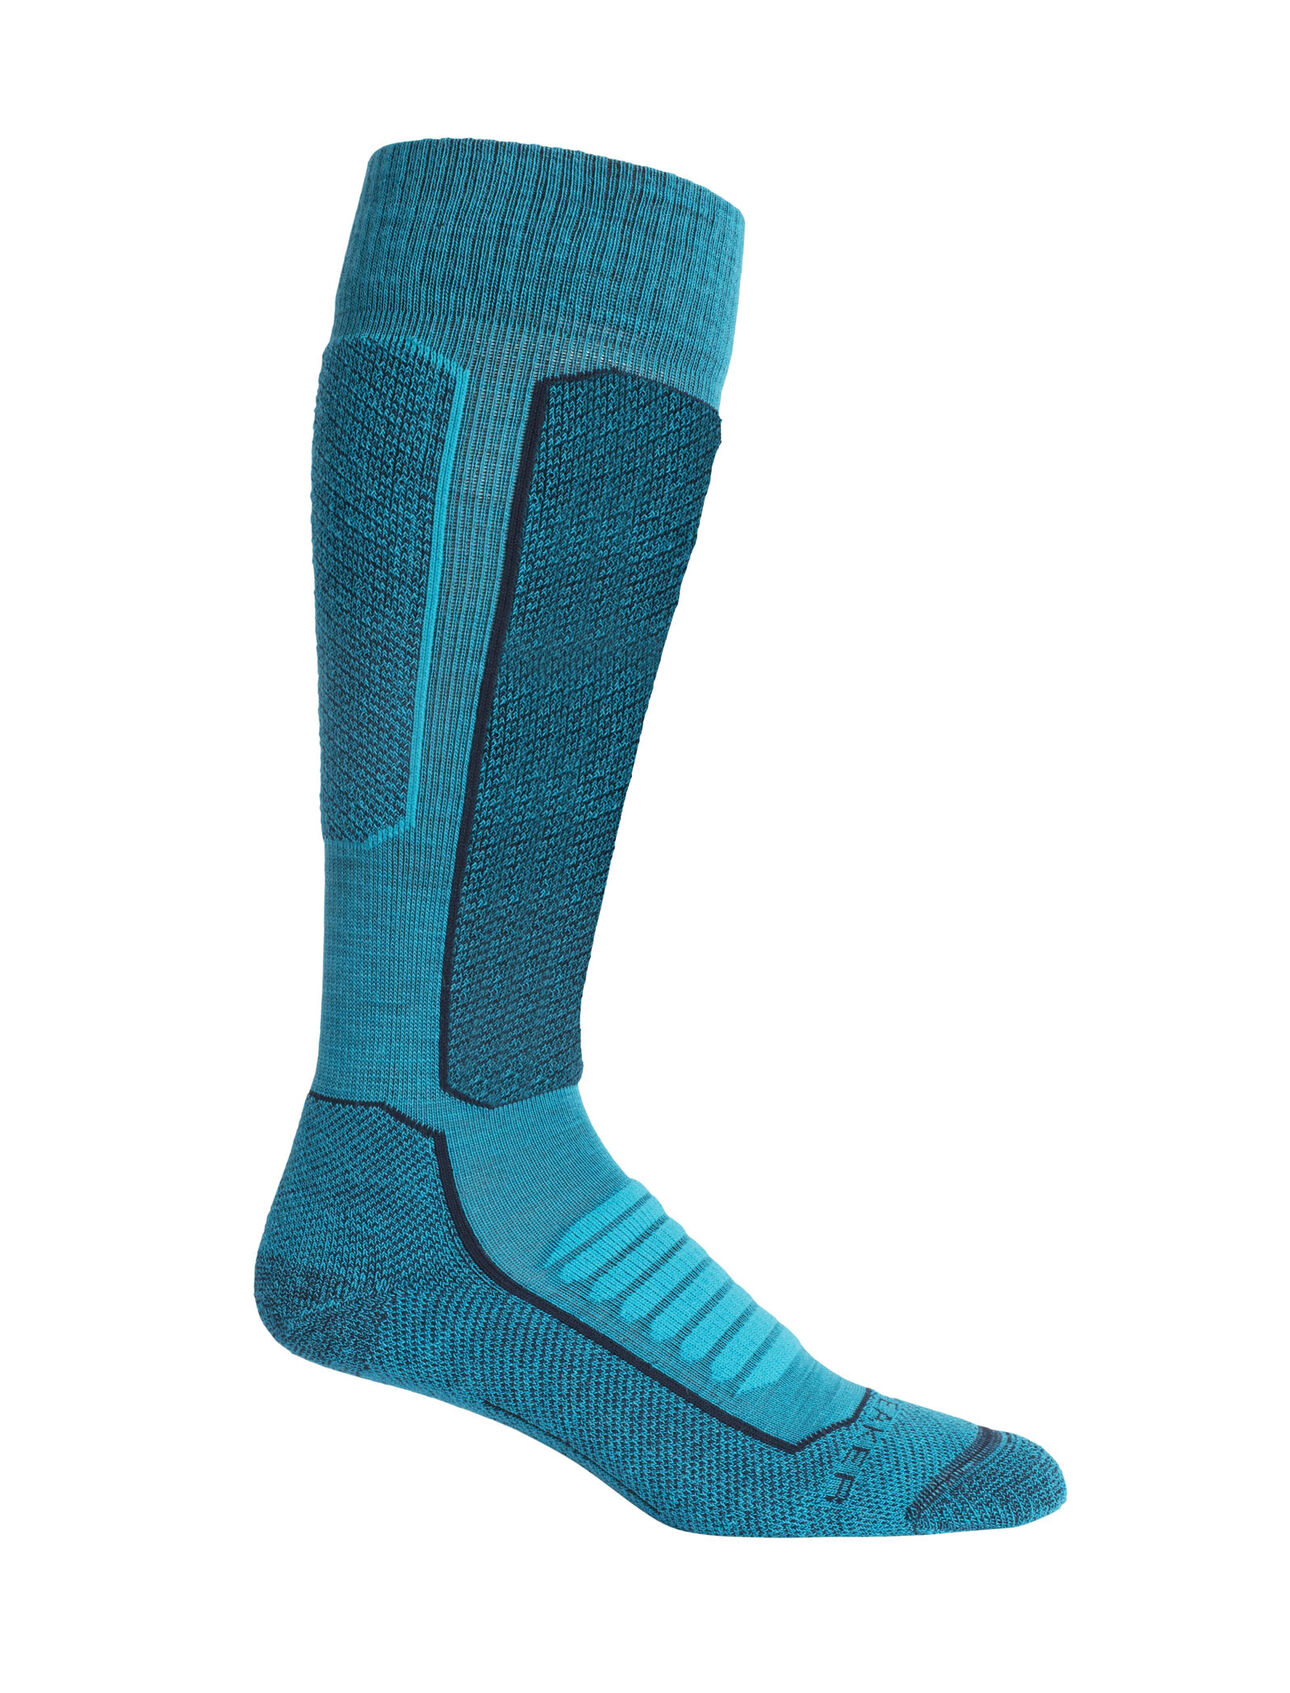 Merino Ski+ Medium Over the Calf Socks